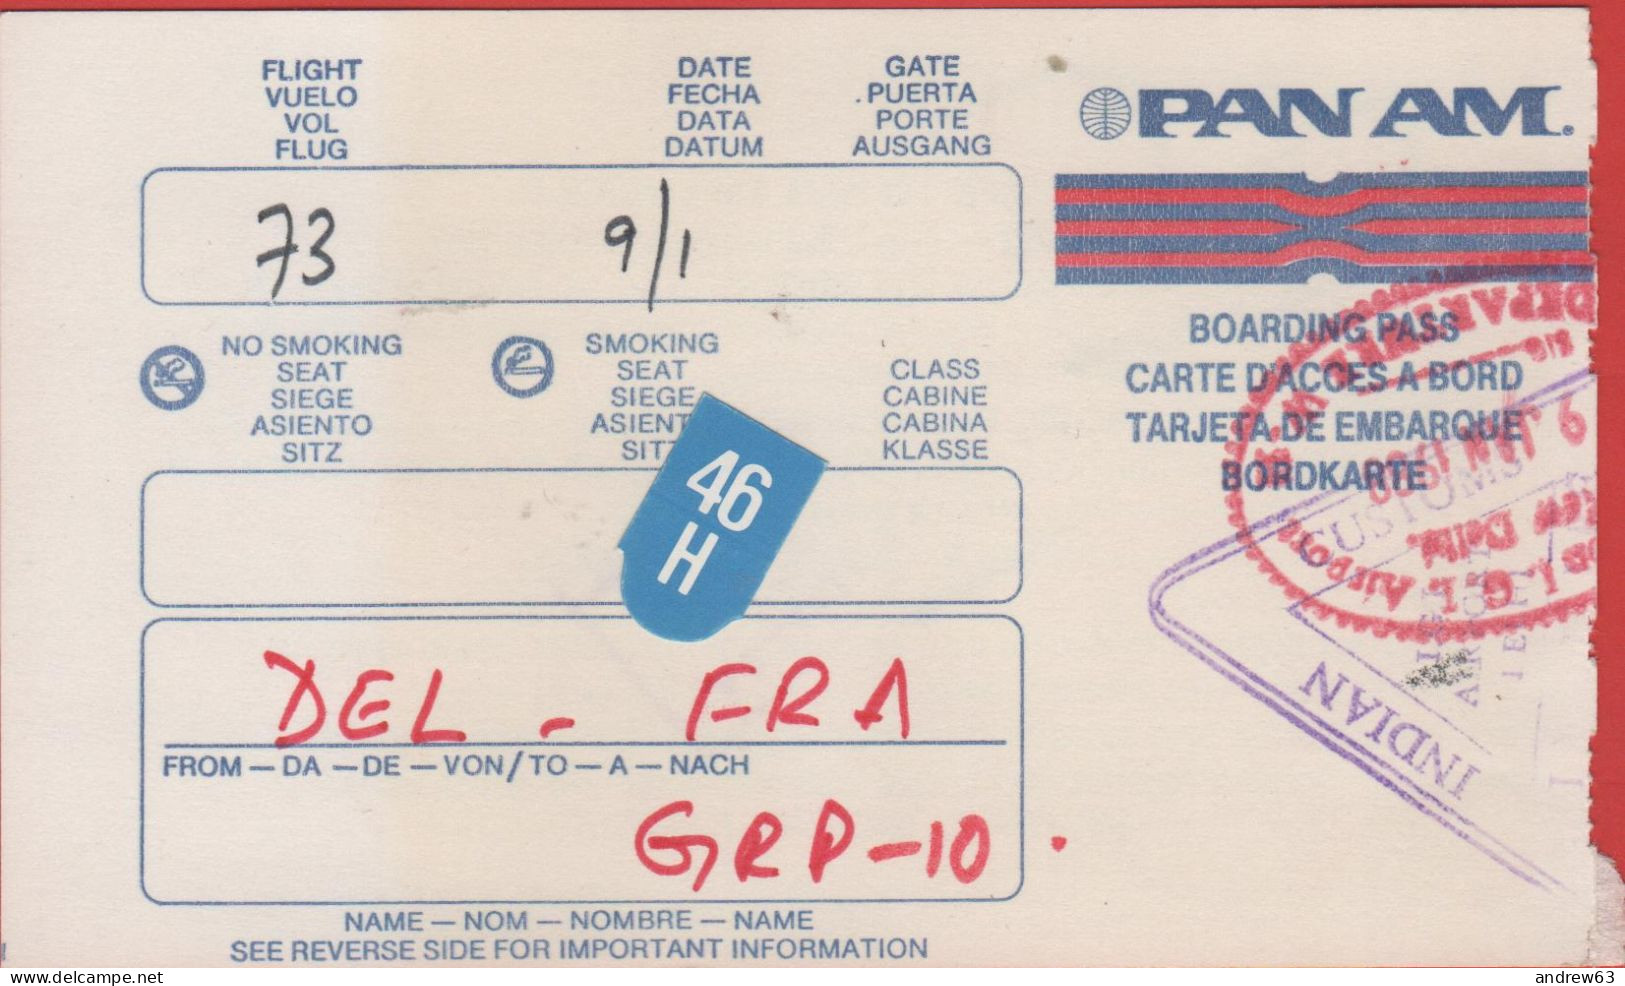 USA - PAN AM - DEL-FRA - Carta D'Imbarco - Boarding Pass - Welt